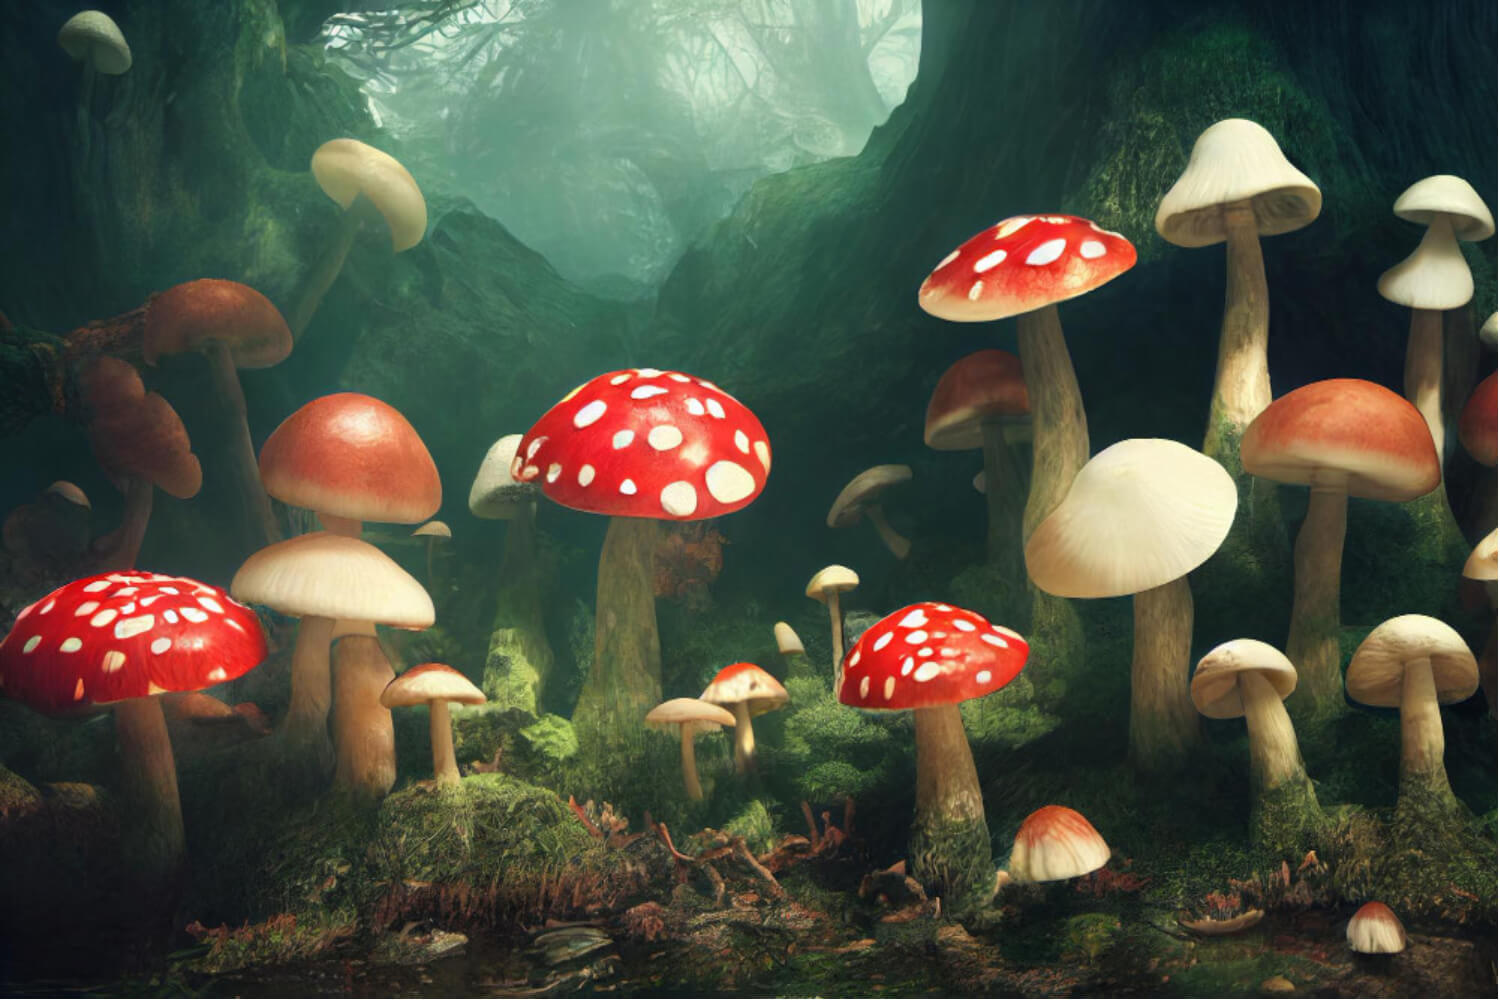 hallucinogenic psilocybin mushrooms